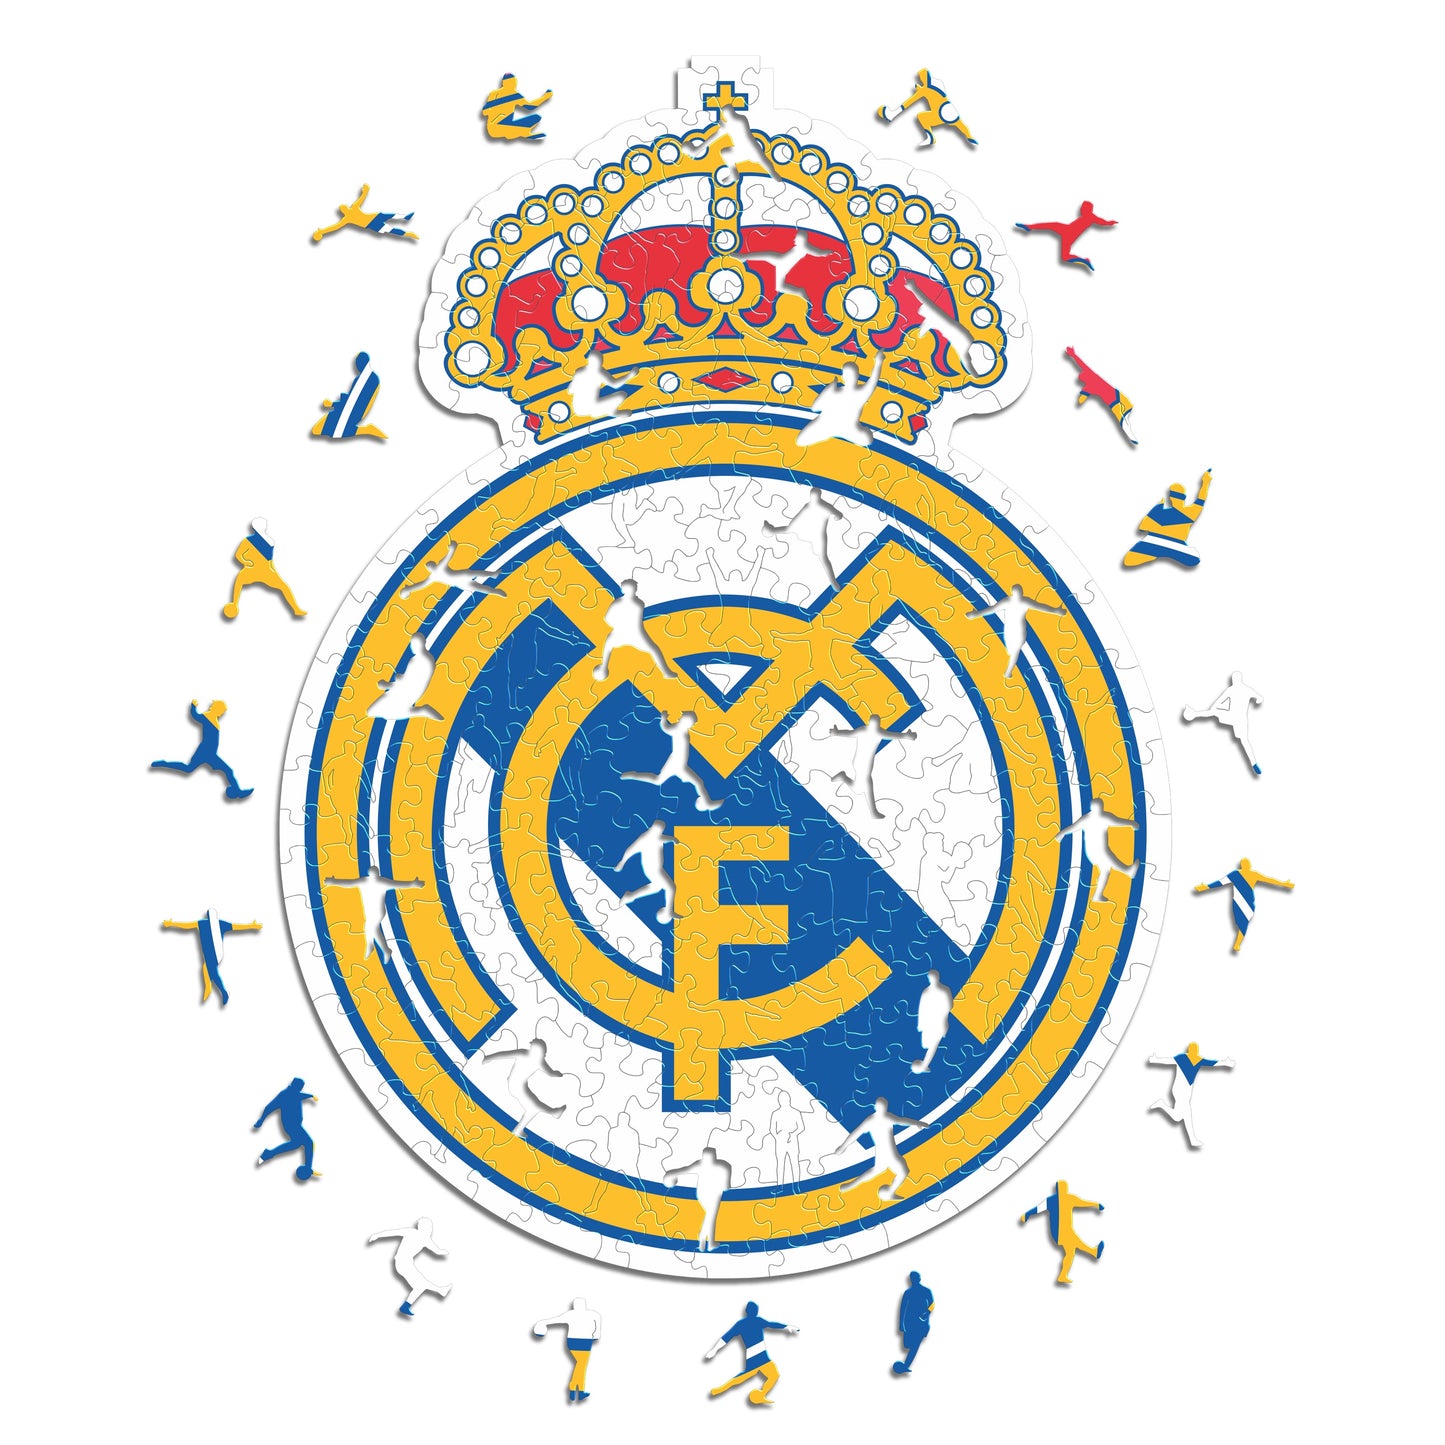 2 PACK Real Madrid CF® Logo + Jersey